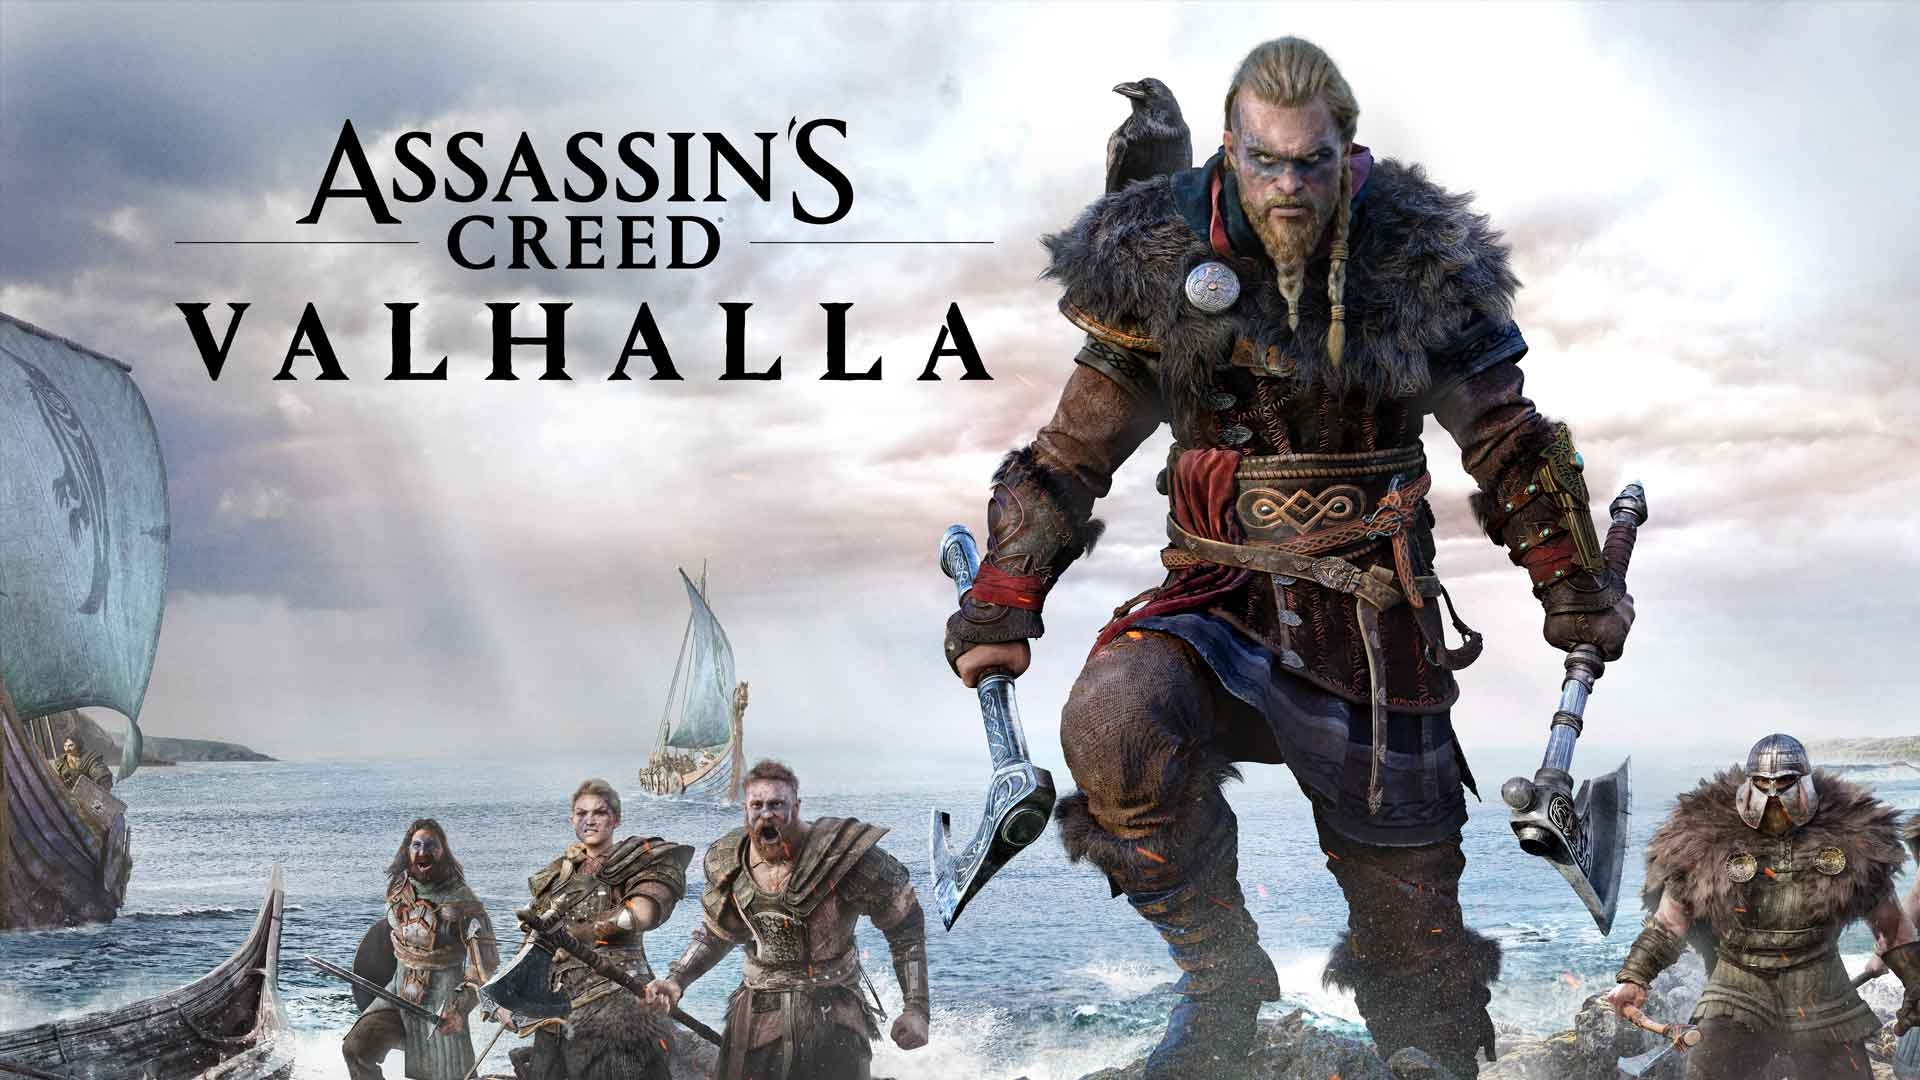 Assassins Creed Vallhala (Pc) - Jogos (Mídia Digital) - DFG